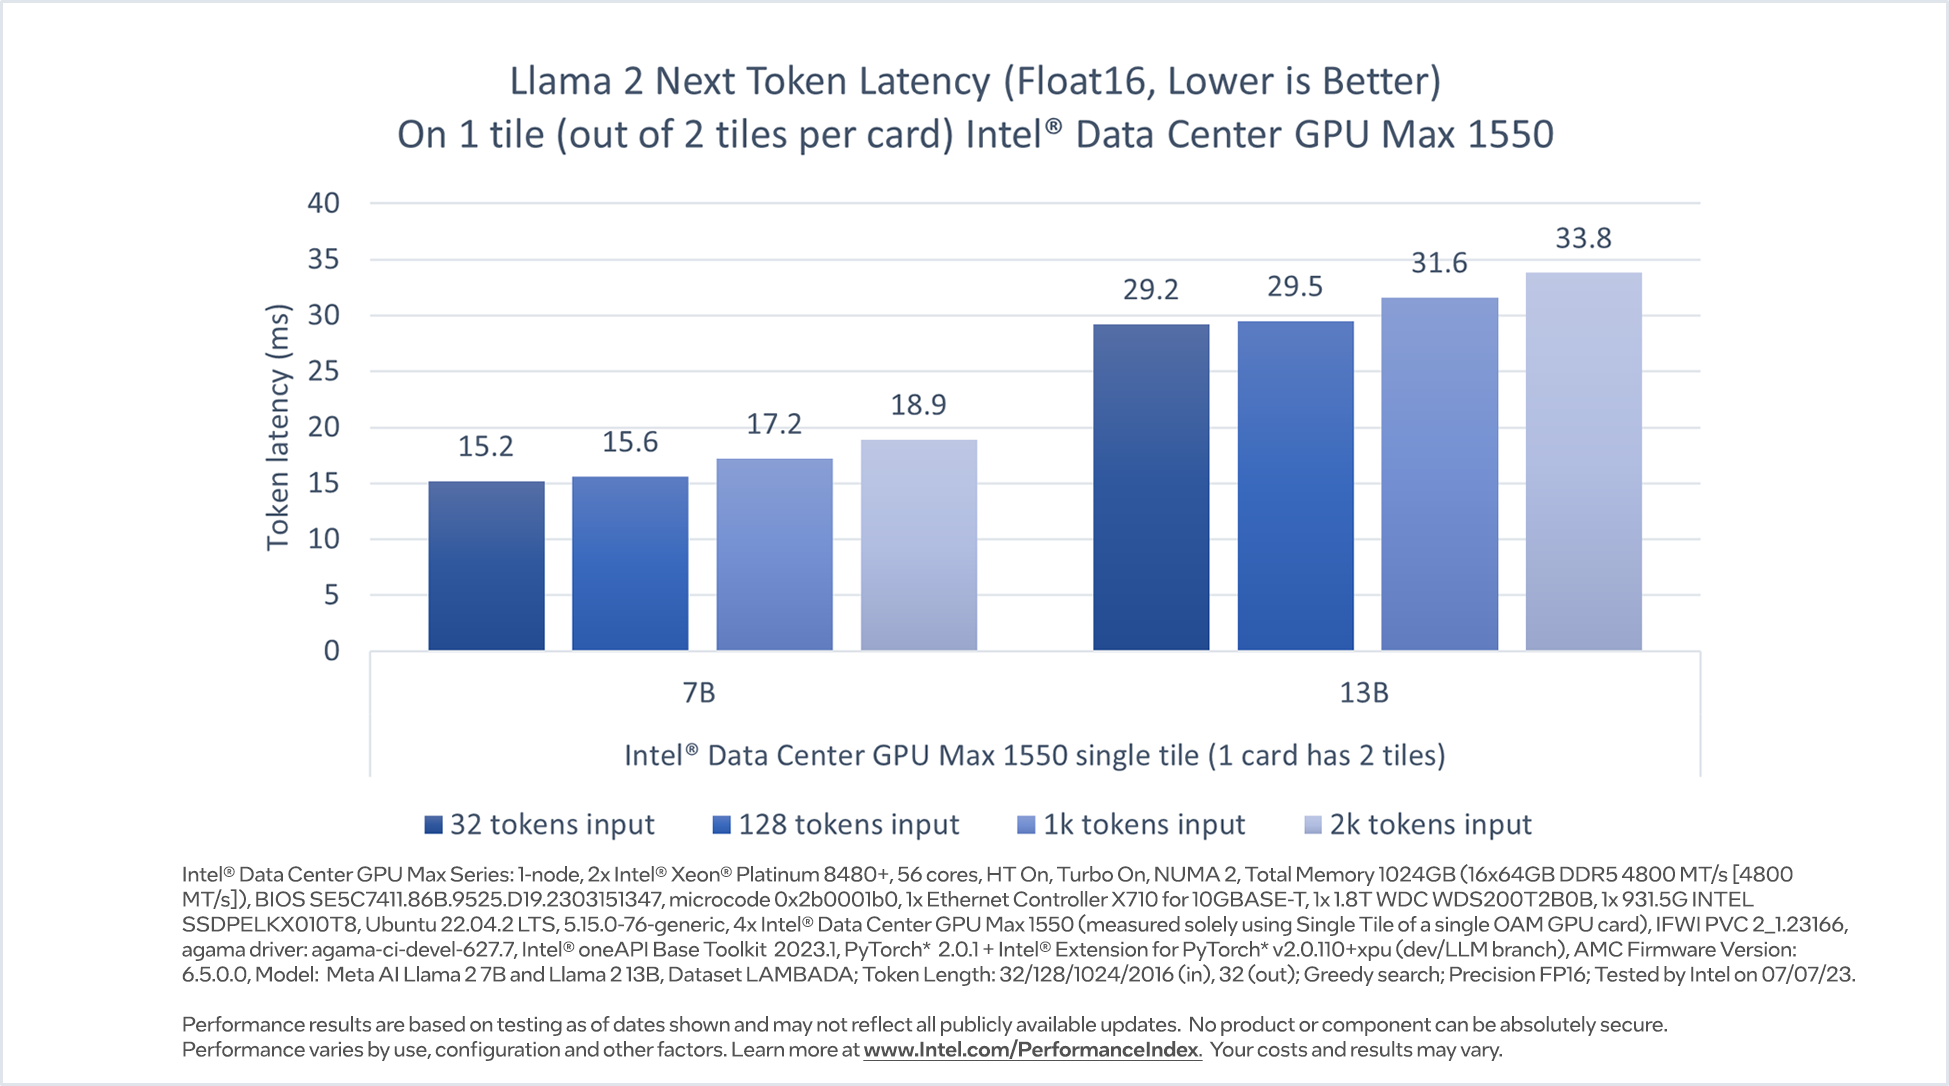 Llama 2 7B and 13B inference performance on Intel Data Center GPU Max 1550